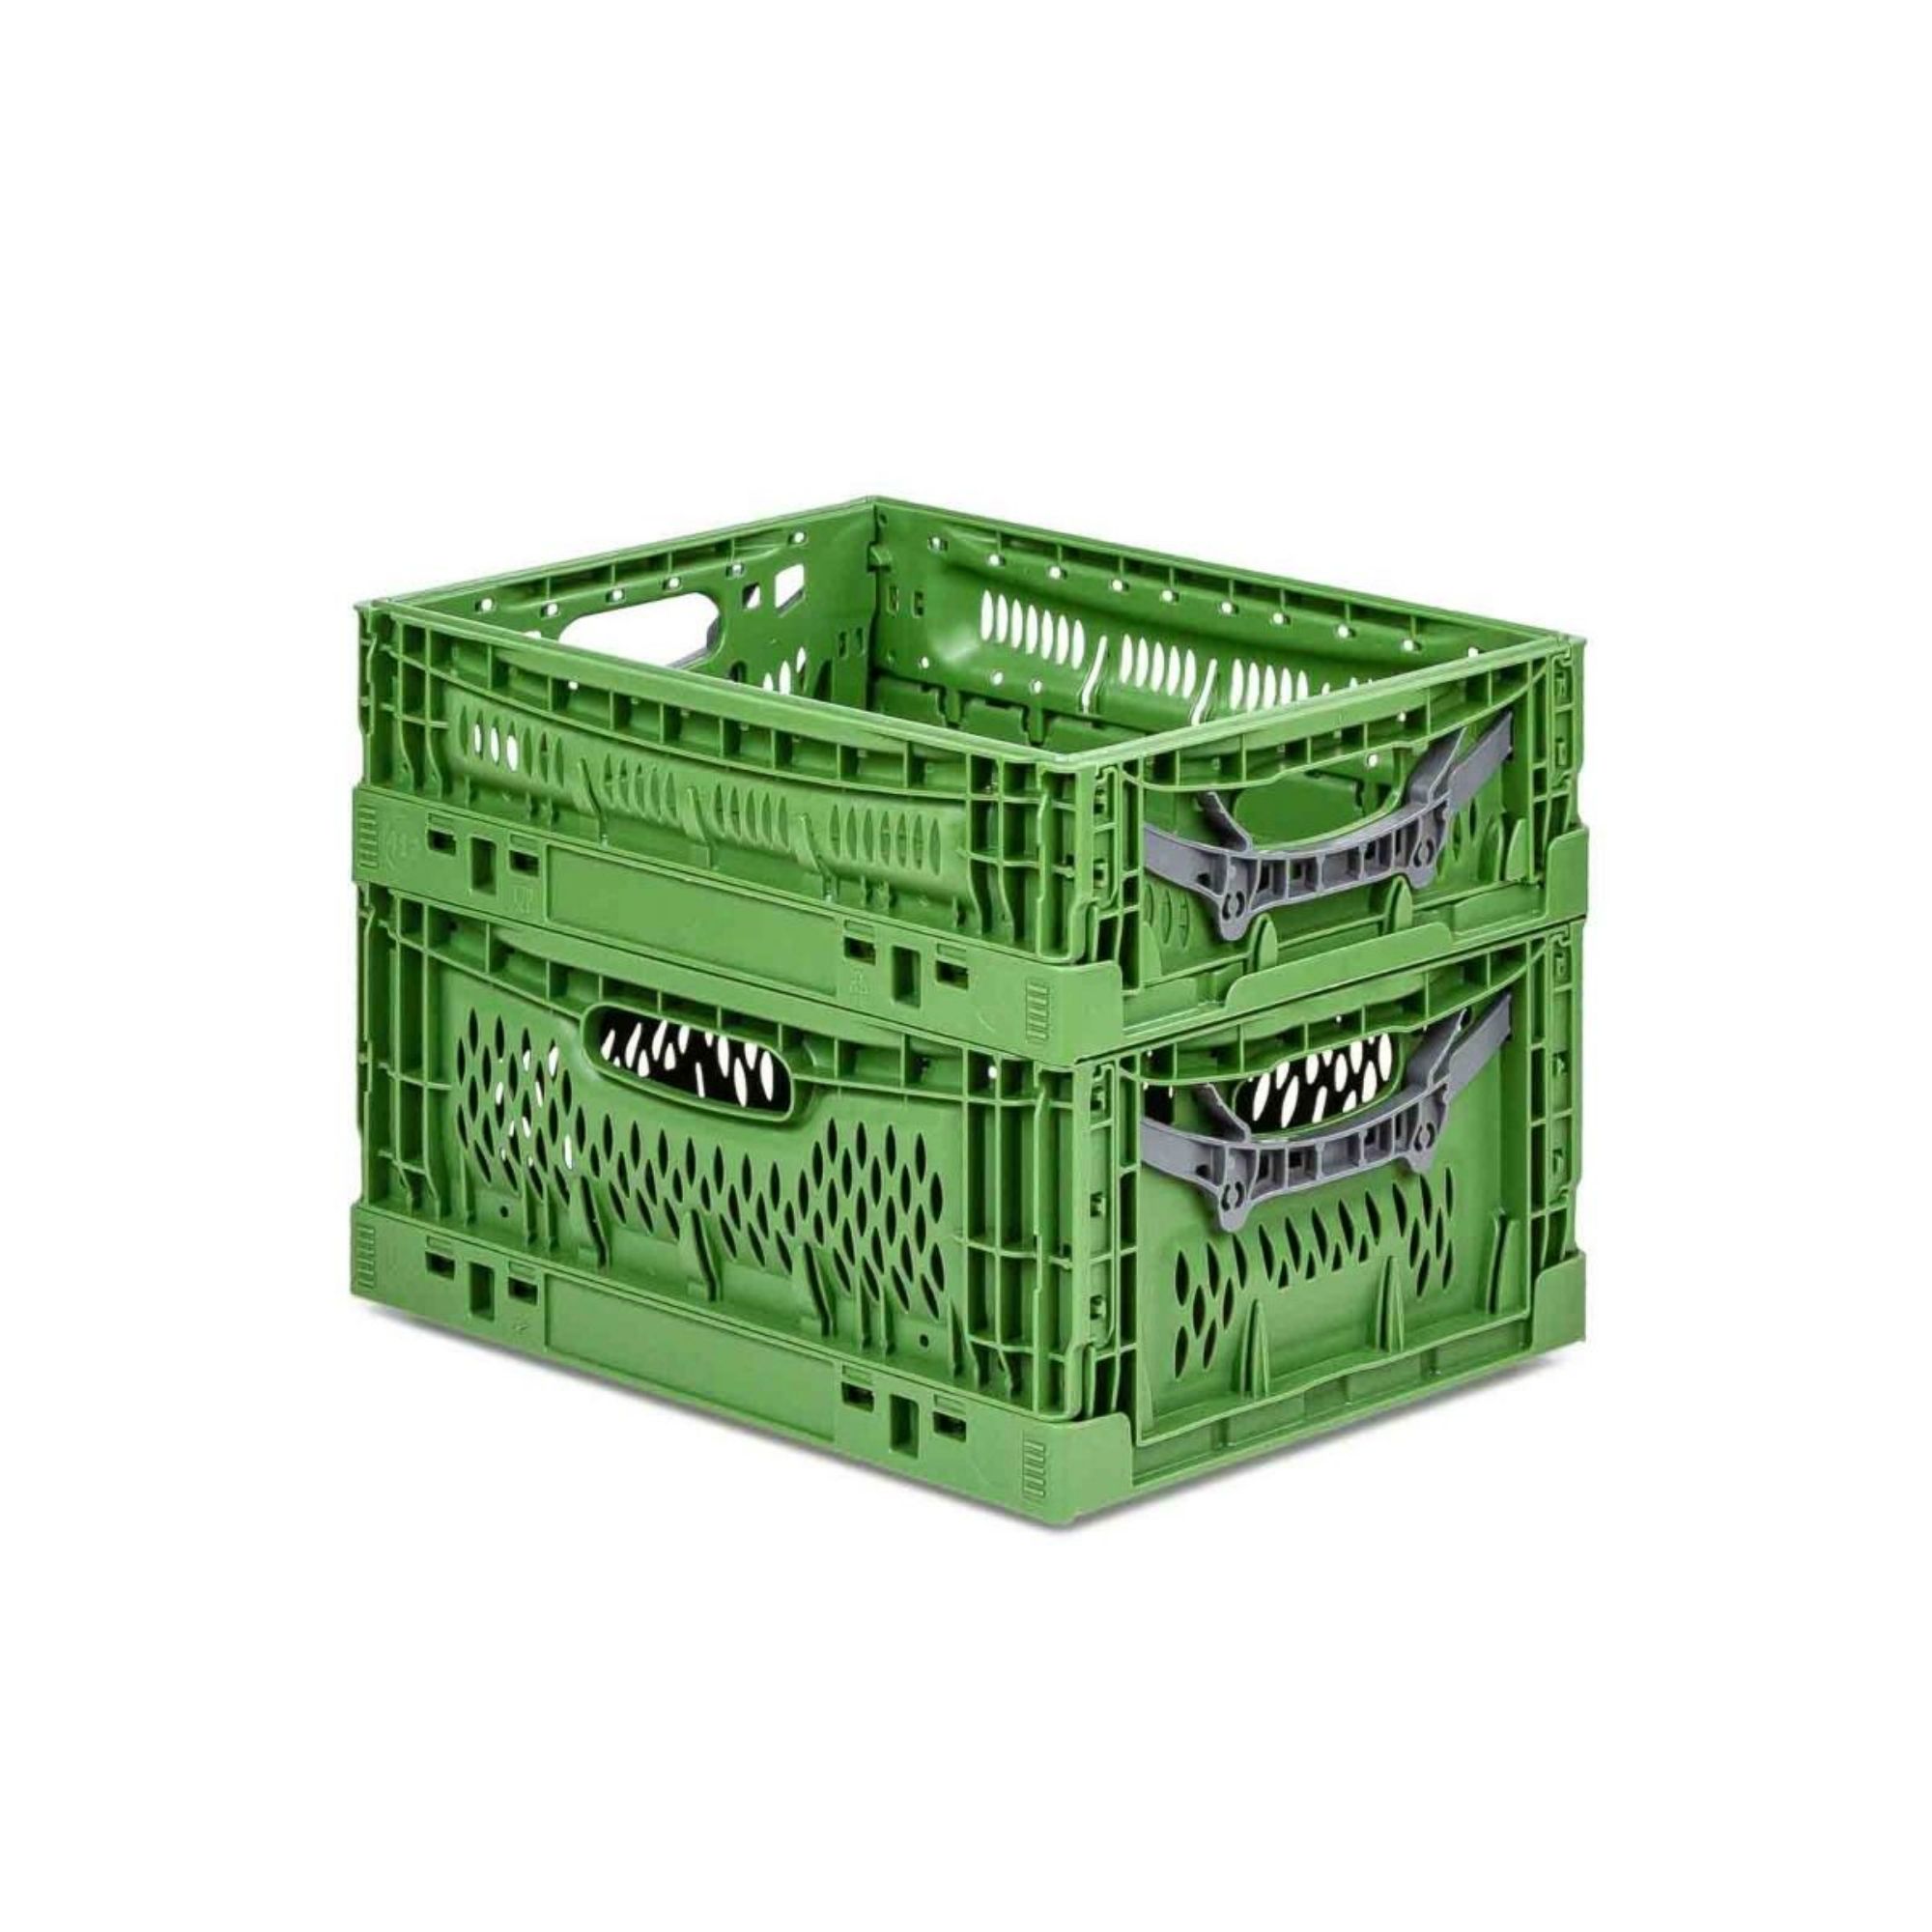 Stabile Profi-Klappbox Chameleon in Industriequalität | HxBxT 18x30x40cm | 17 Liter | klappbar stapelbar durchbrochen lebensmittelecht | Eurobox Eurobehälter Transportbehälter Stapelbehlter Faltbox